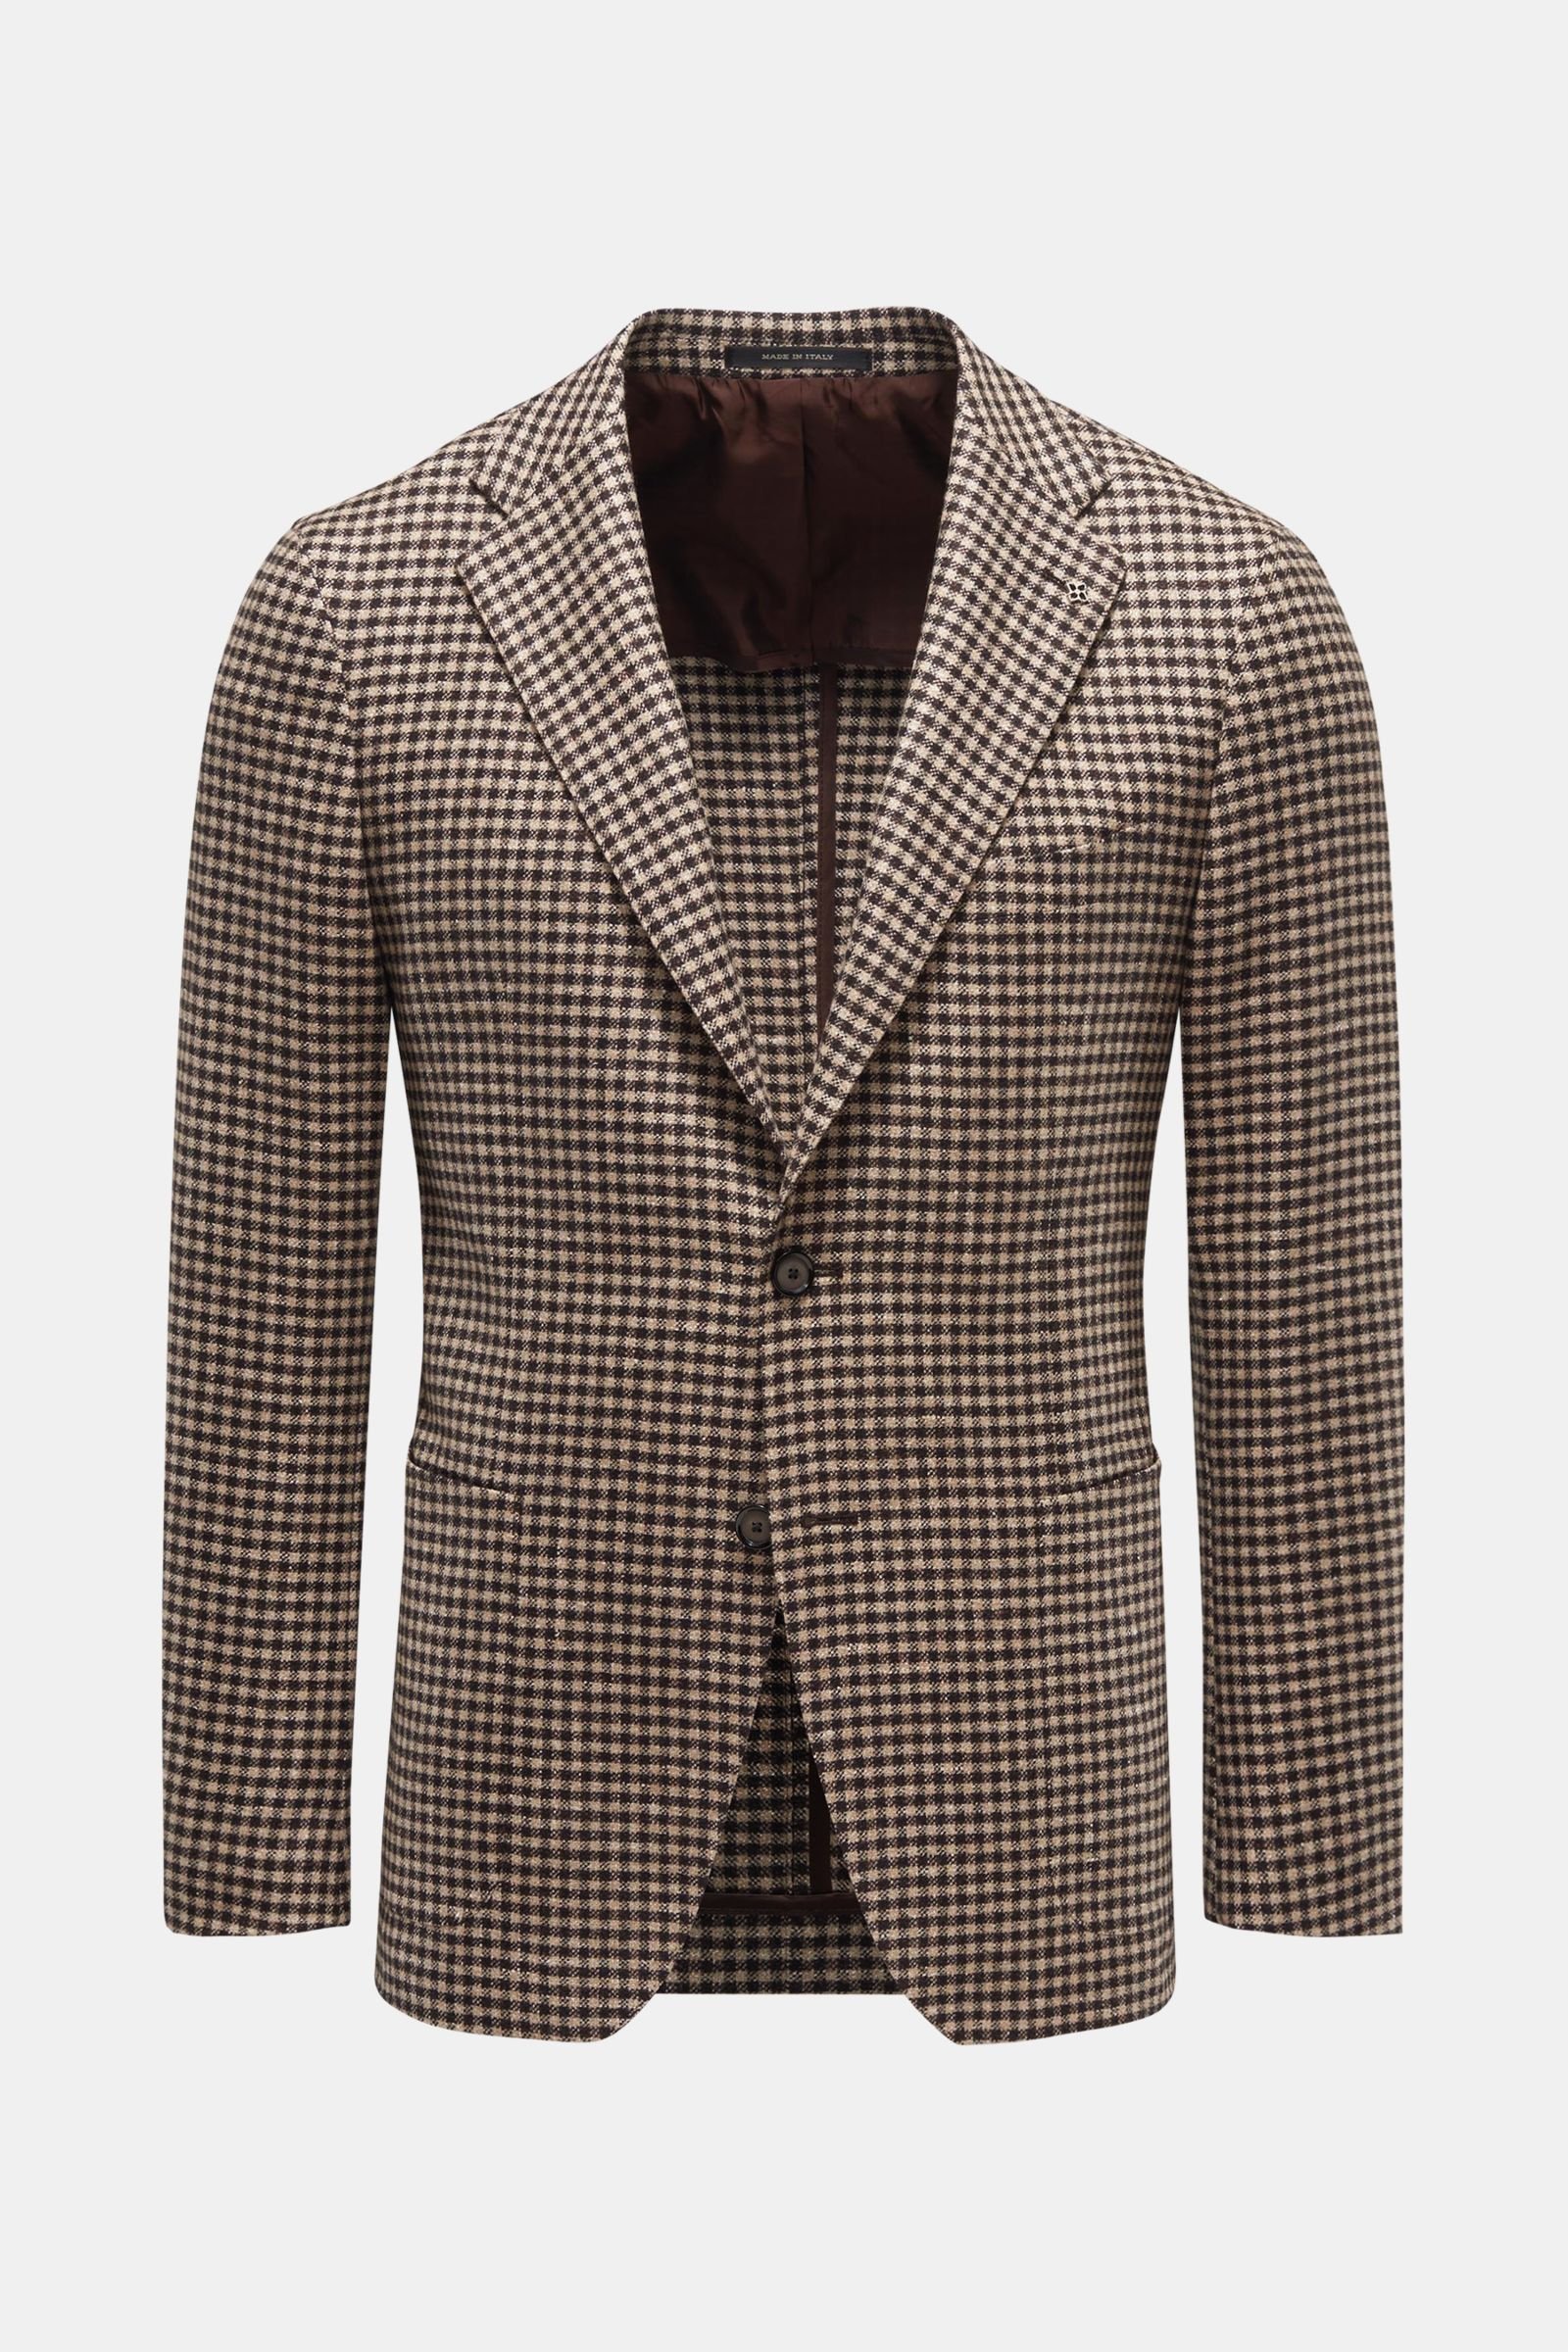 Smart-casual jacket beige/dark brown checked